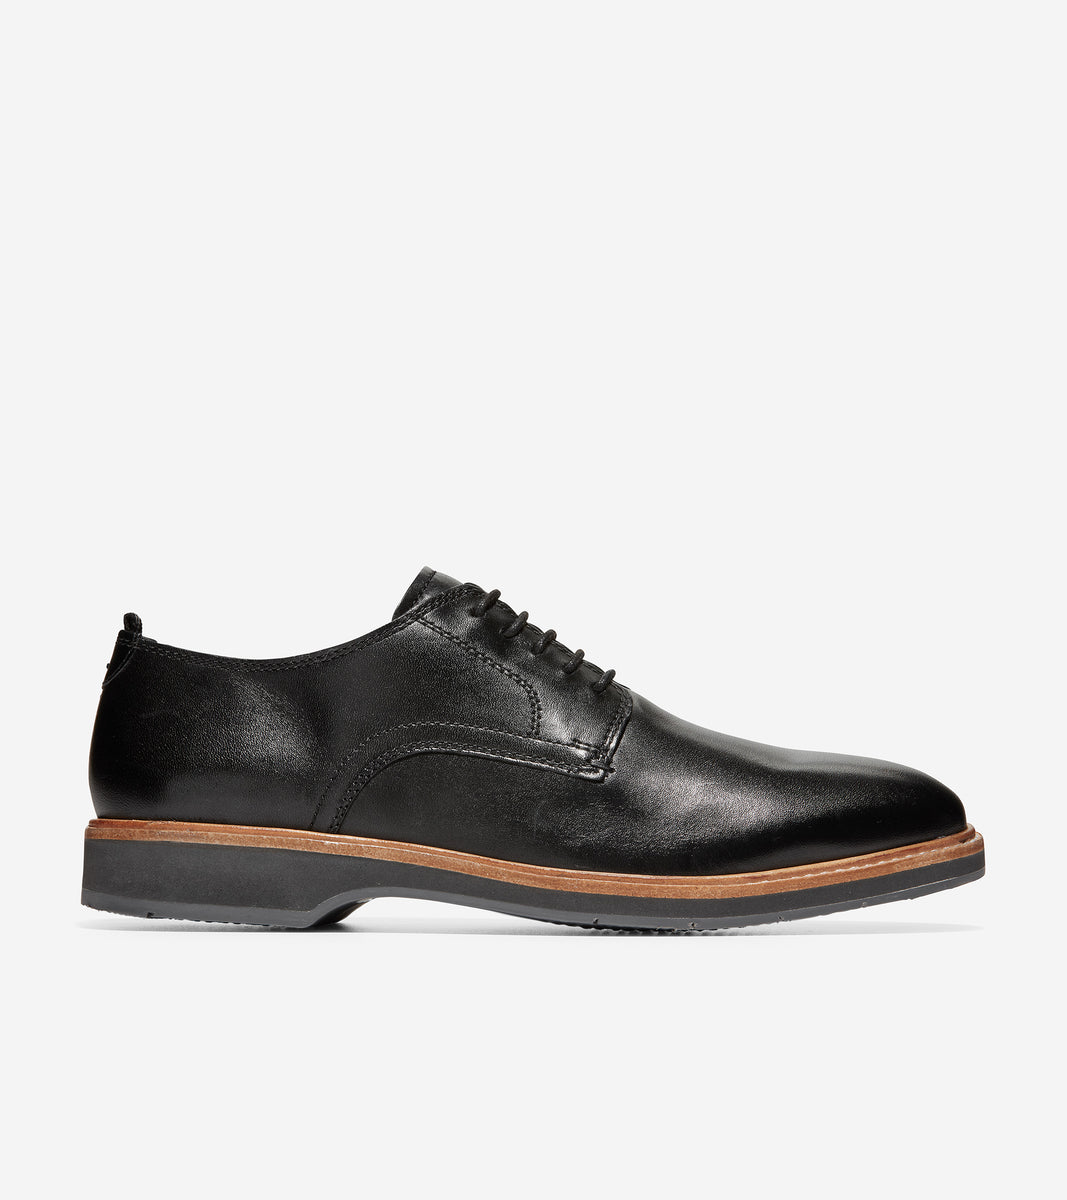 ColeHaan-Morris Plain Oxford-c31445-Black Smooth Leather